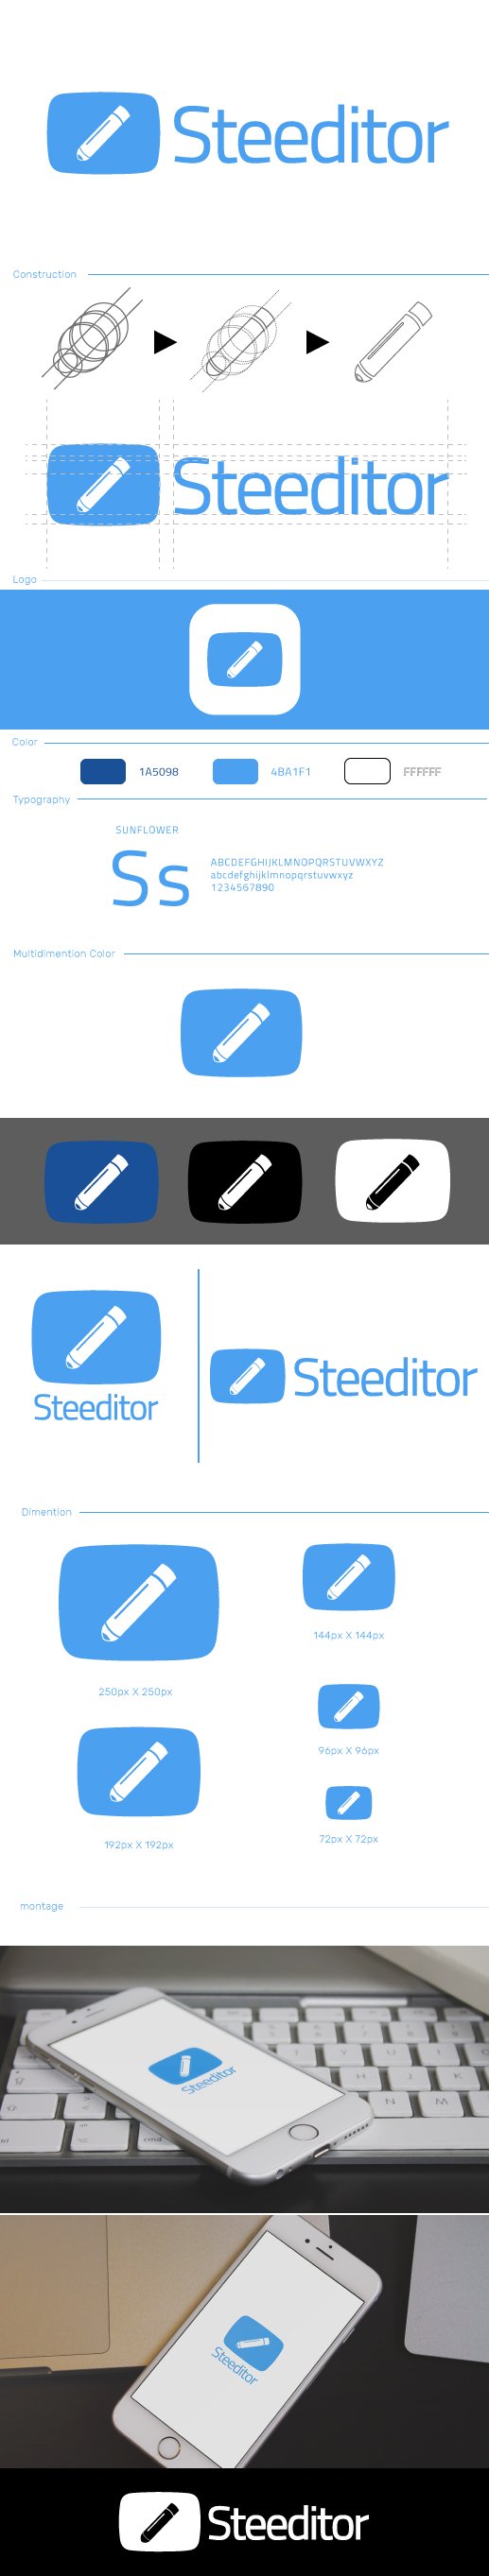 steeditor.jpg